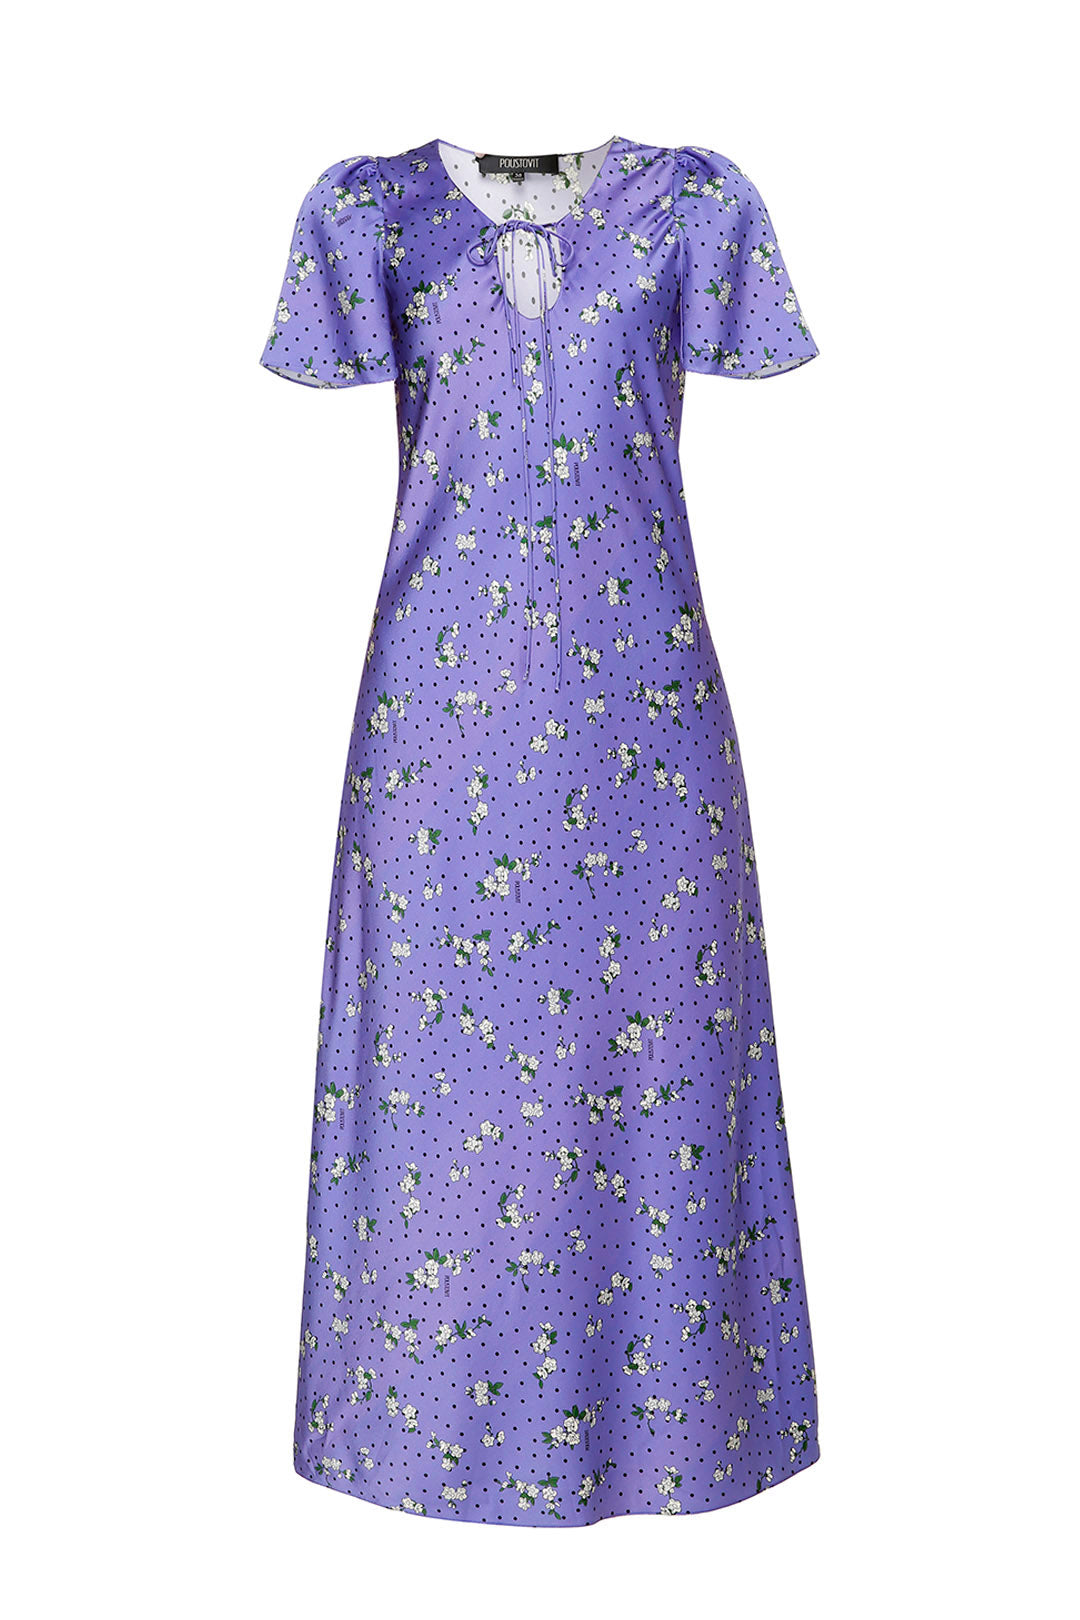 Violet printed silk dress